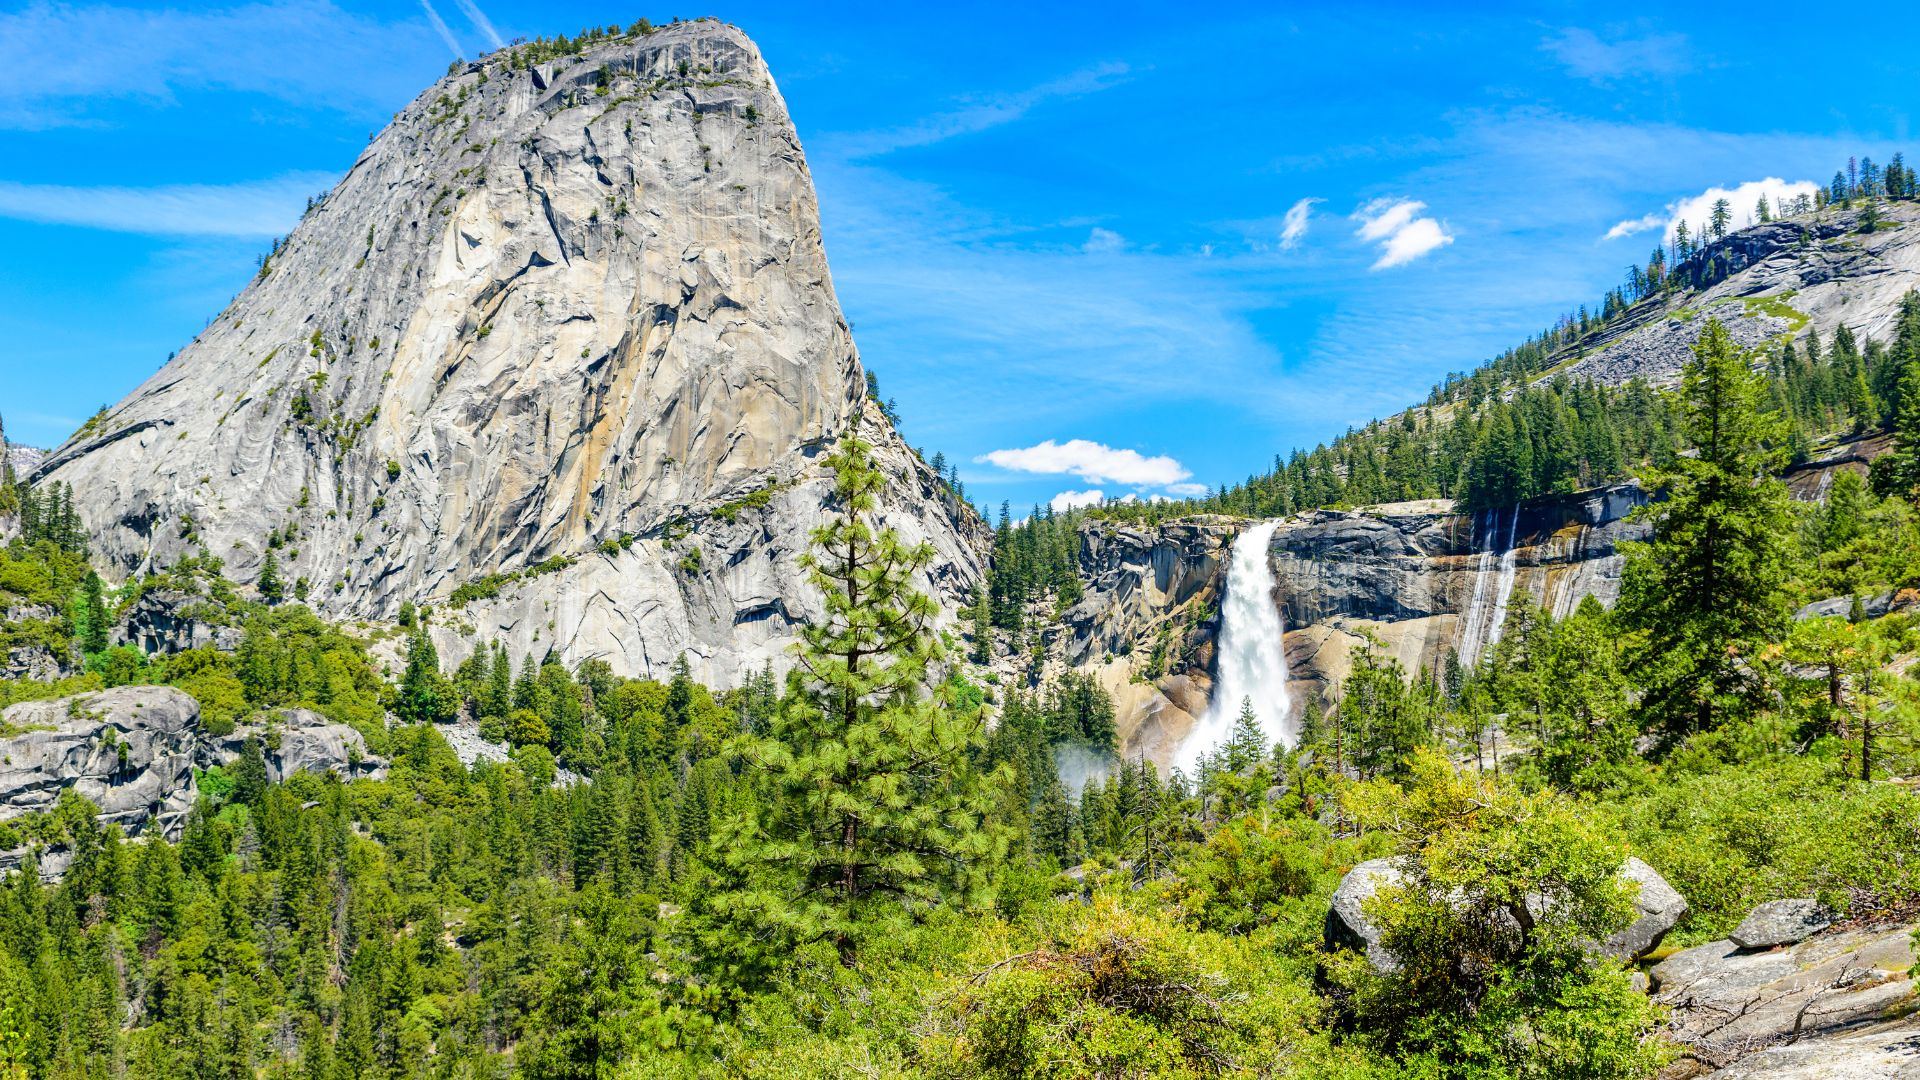 John Muir trail hike ends in Yosemite National Park